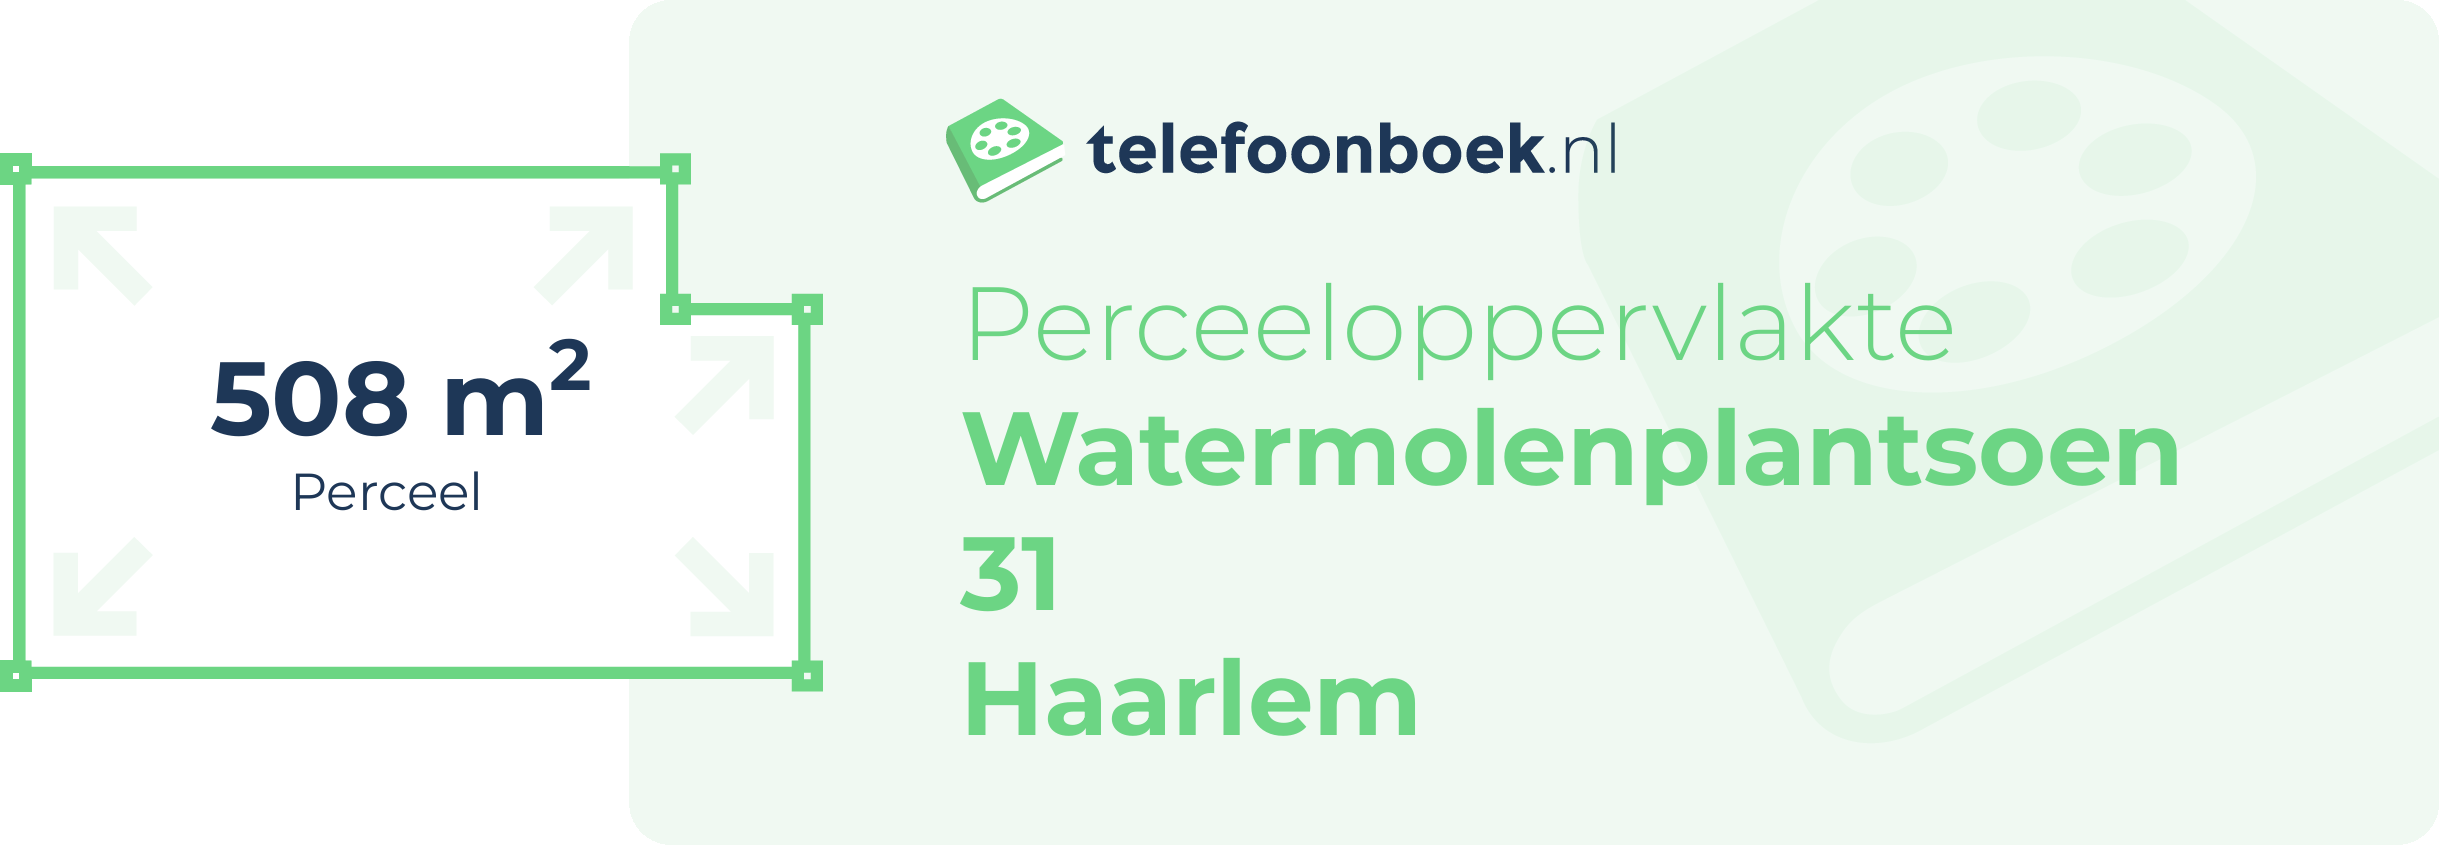 Perceeloppervlakte Watermolenplantsoen 31 Haarlem